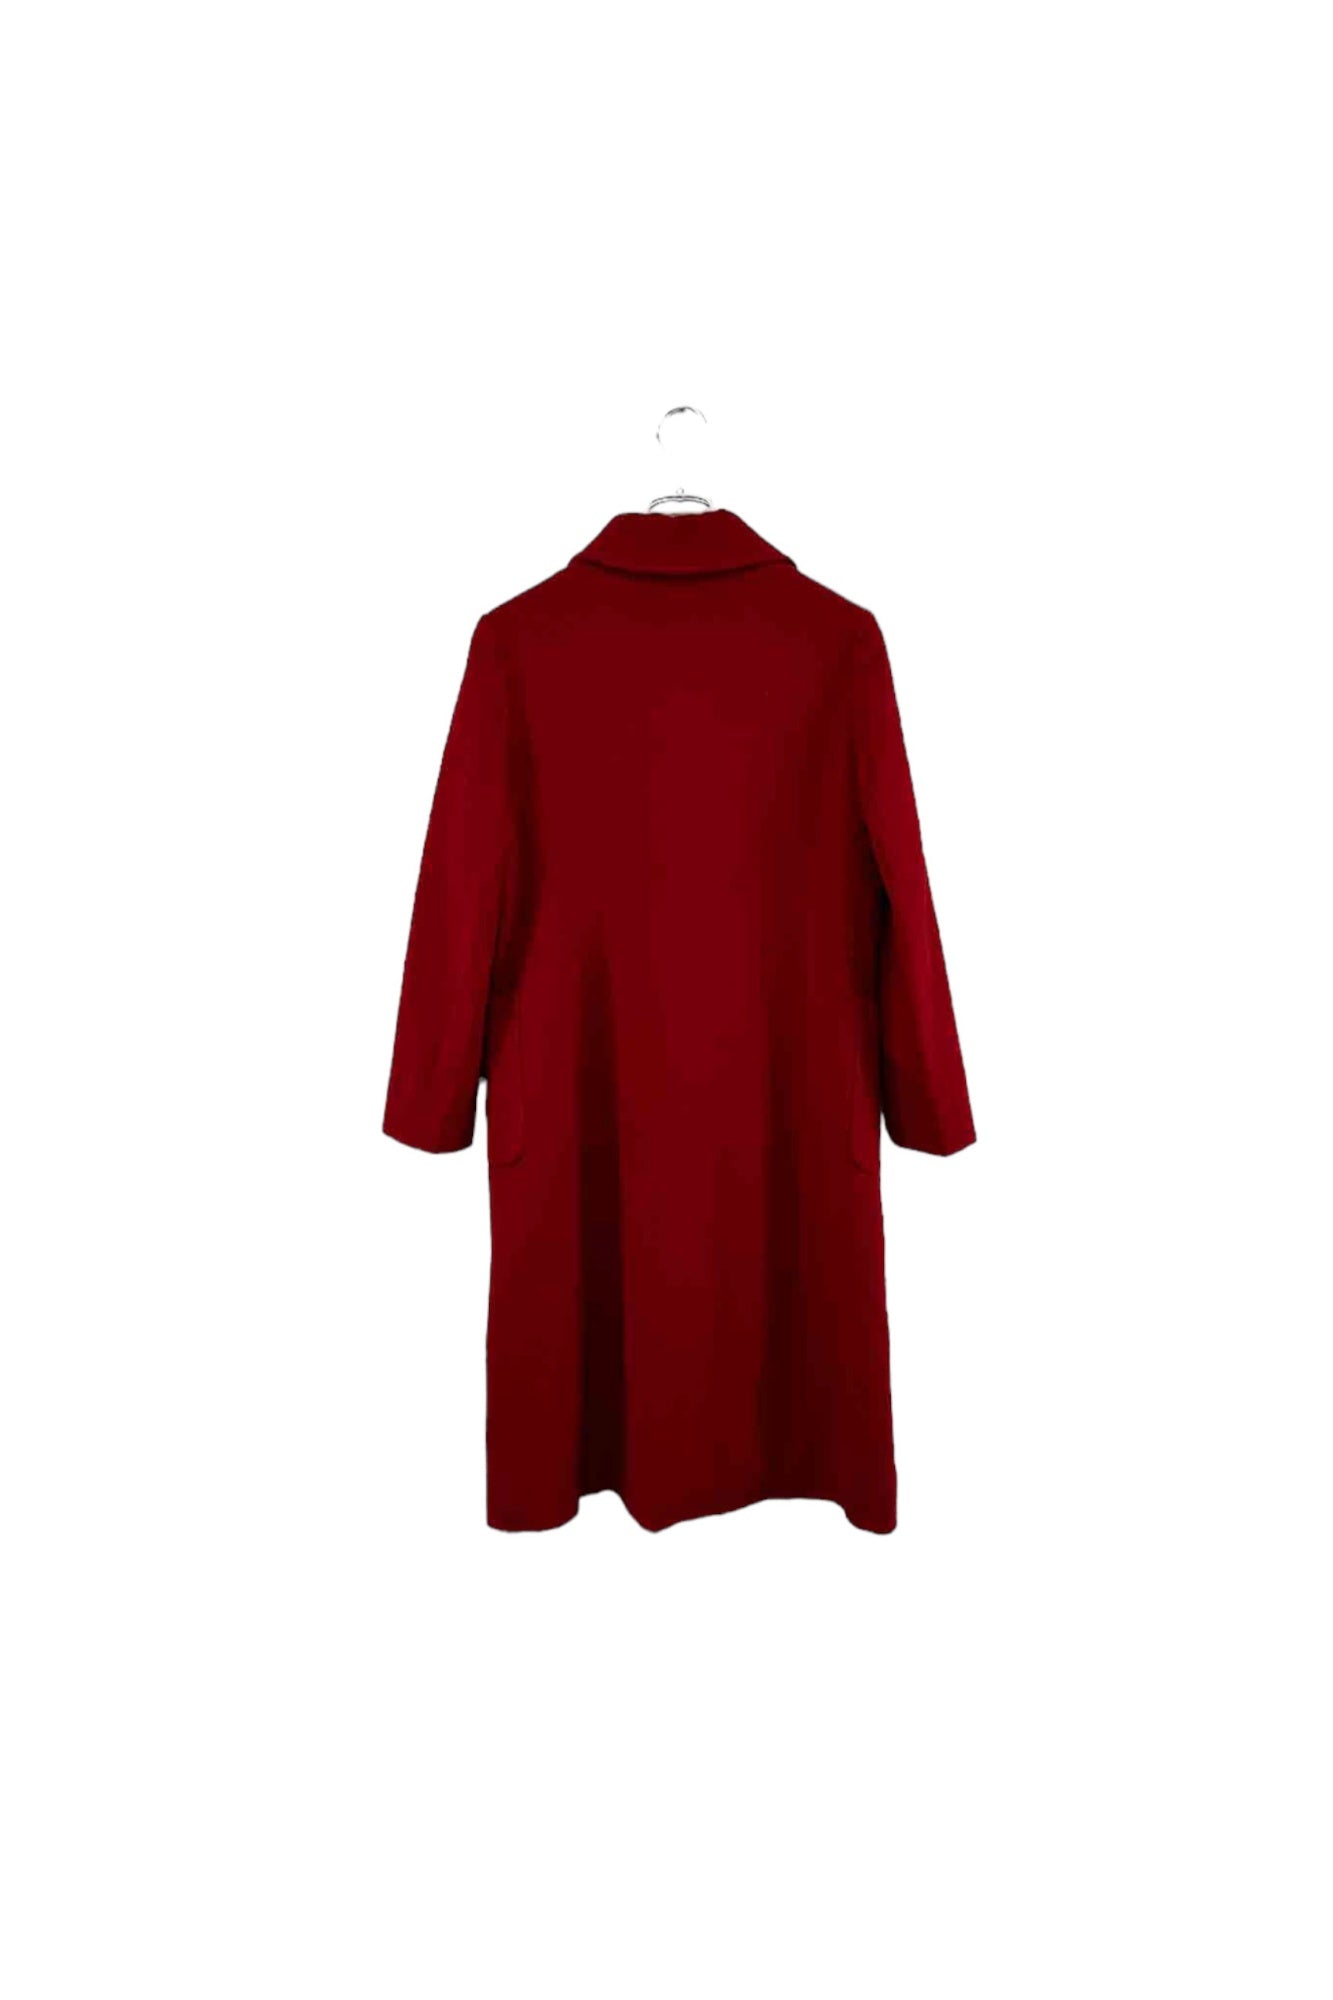 BALENCIAGA red angola coat